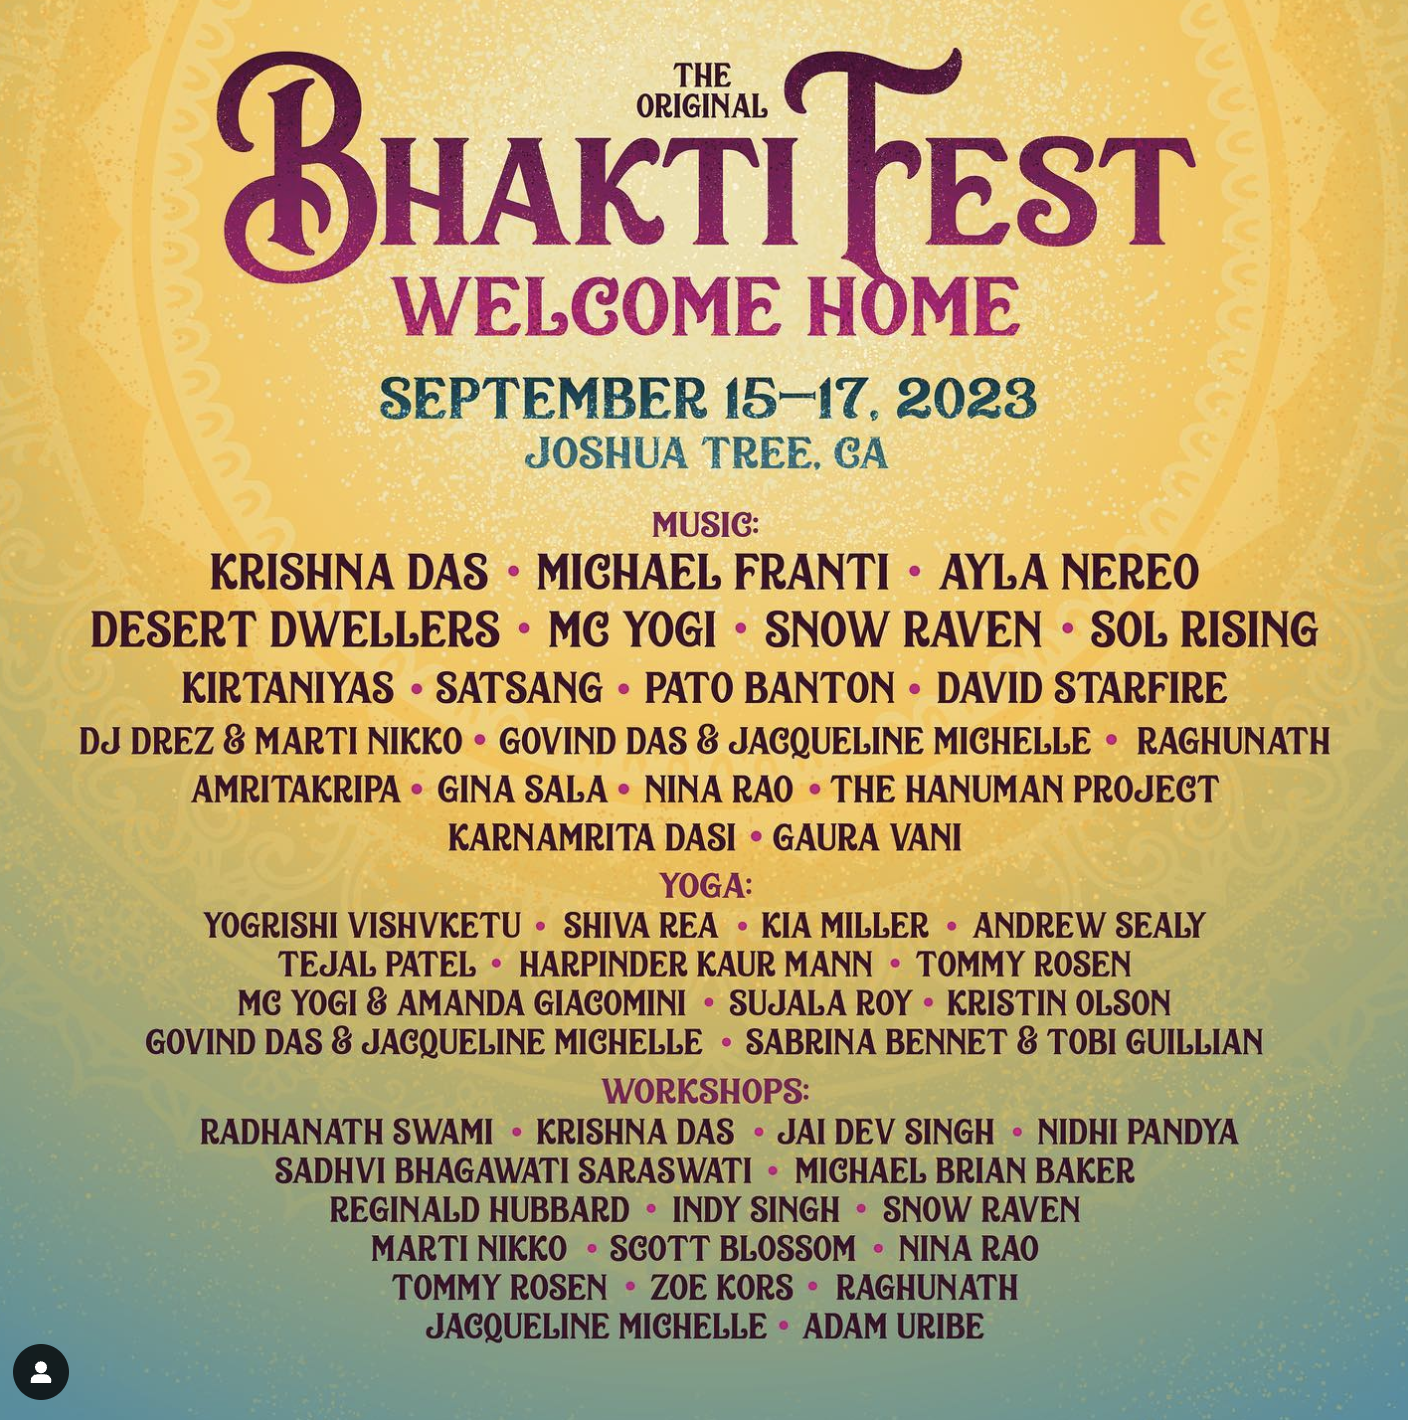 Bhakti Fest